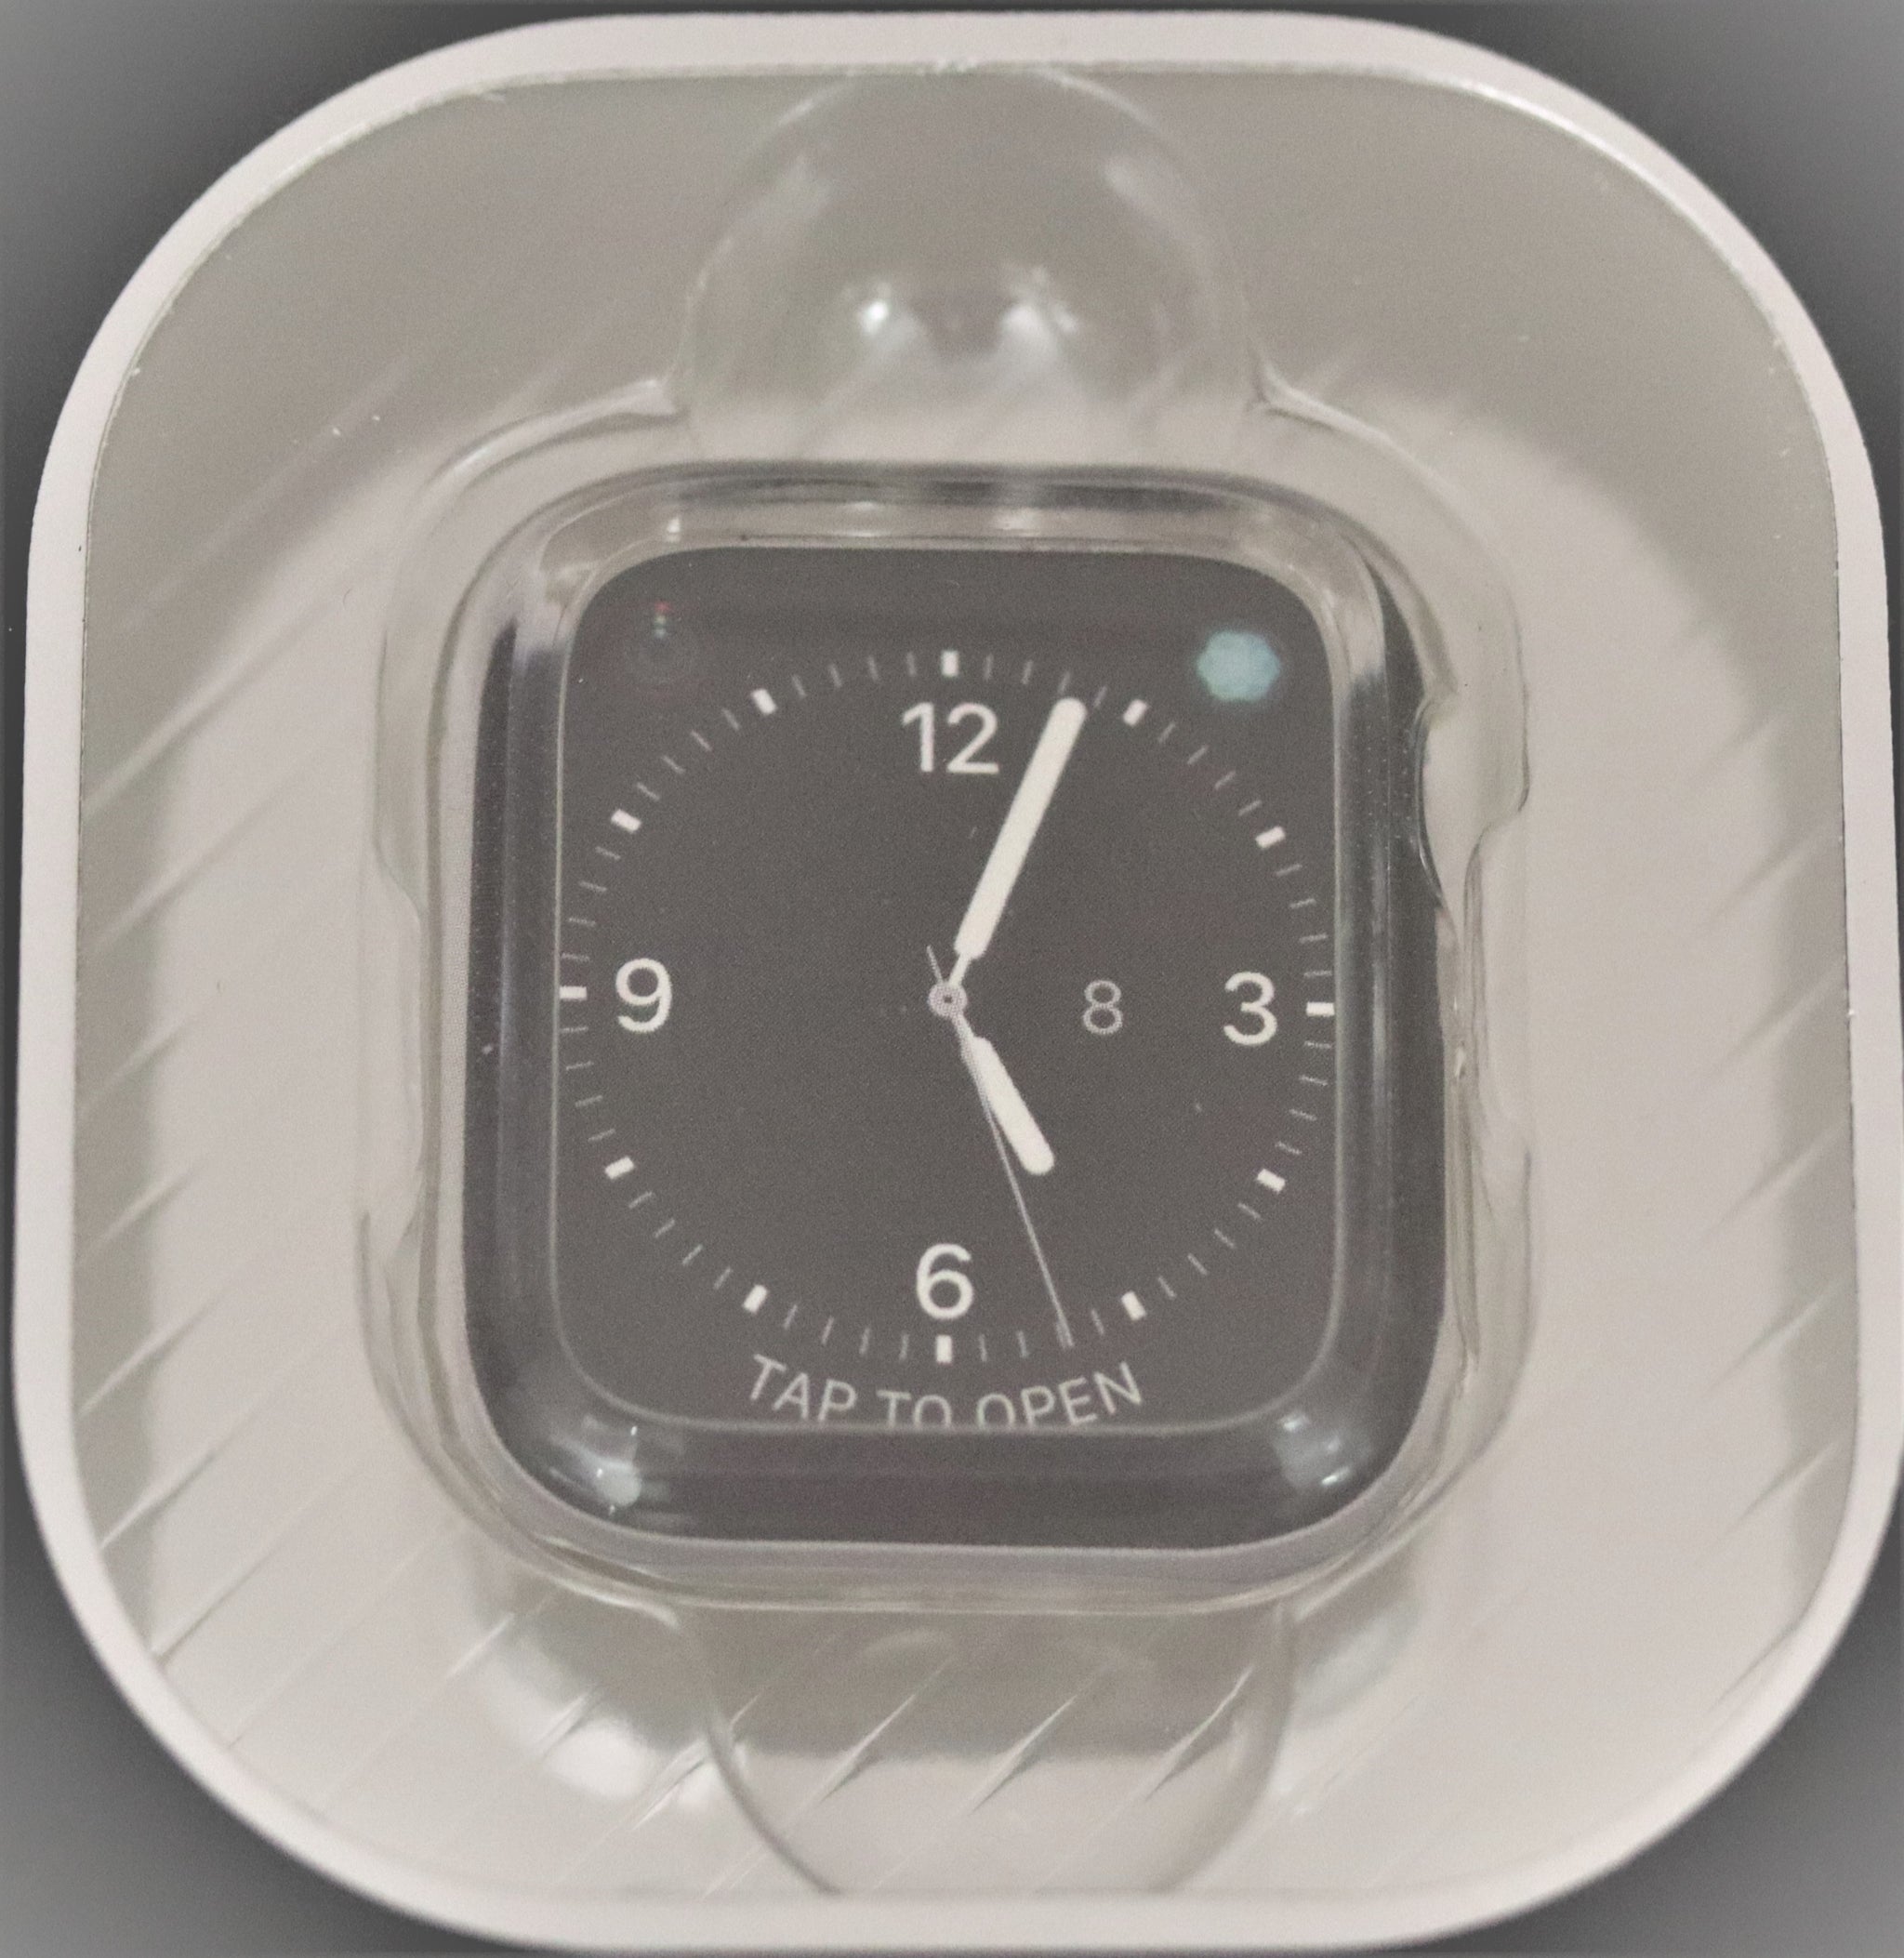 X-Doria - Defense 360X Case for Apple Watch Models